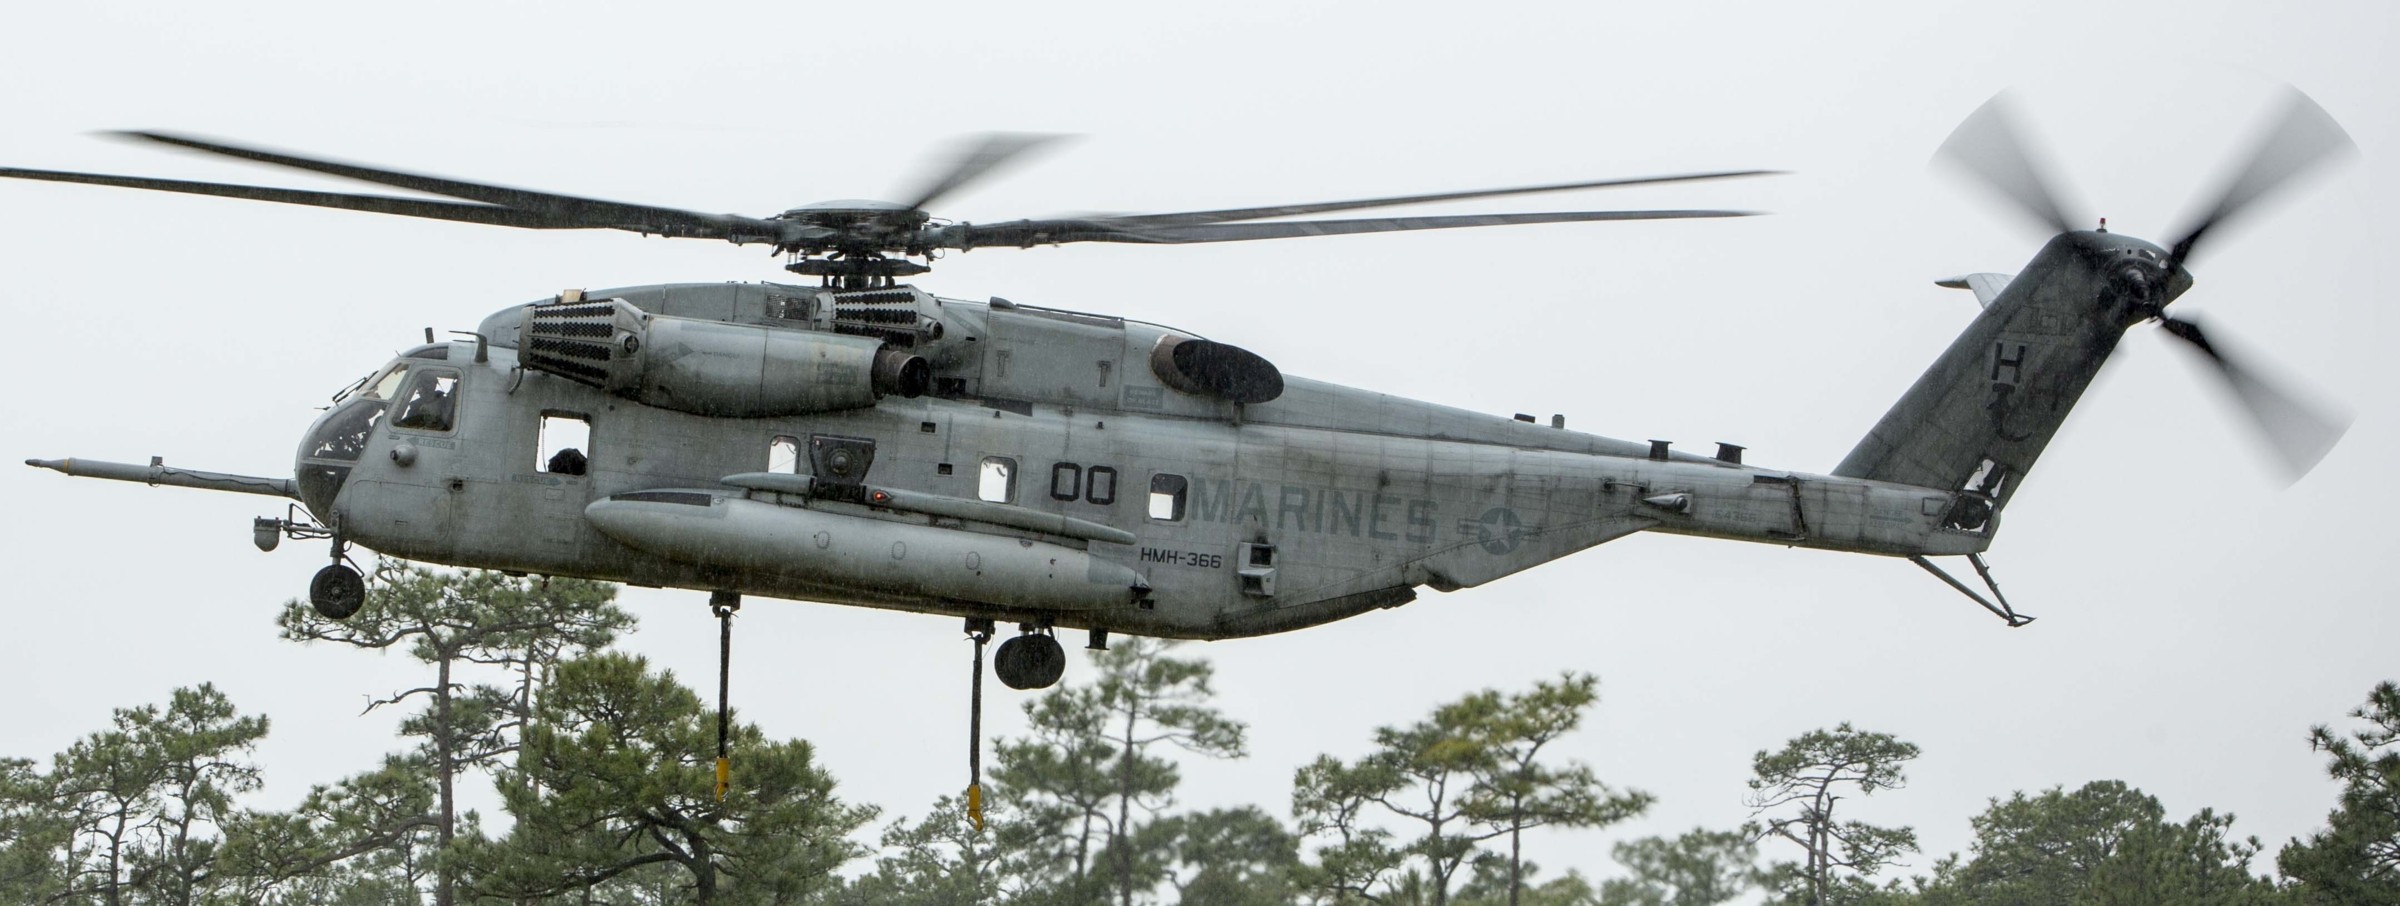 hmh-366 hammerheads marine heavy helicopter squadron usmc sikorsky ch-53e super stallion 71 camp lejeune